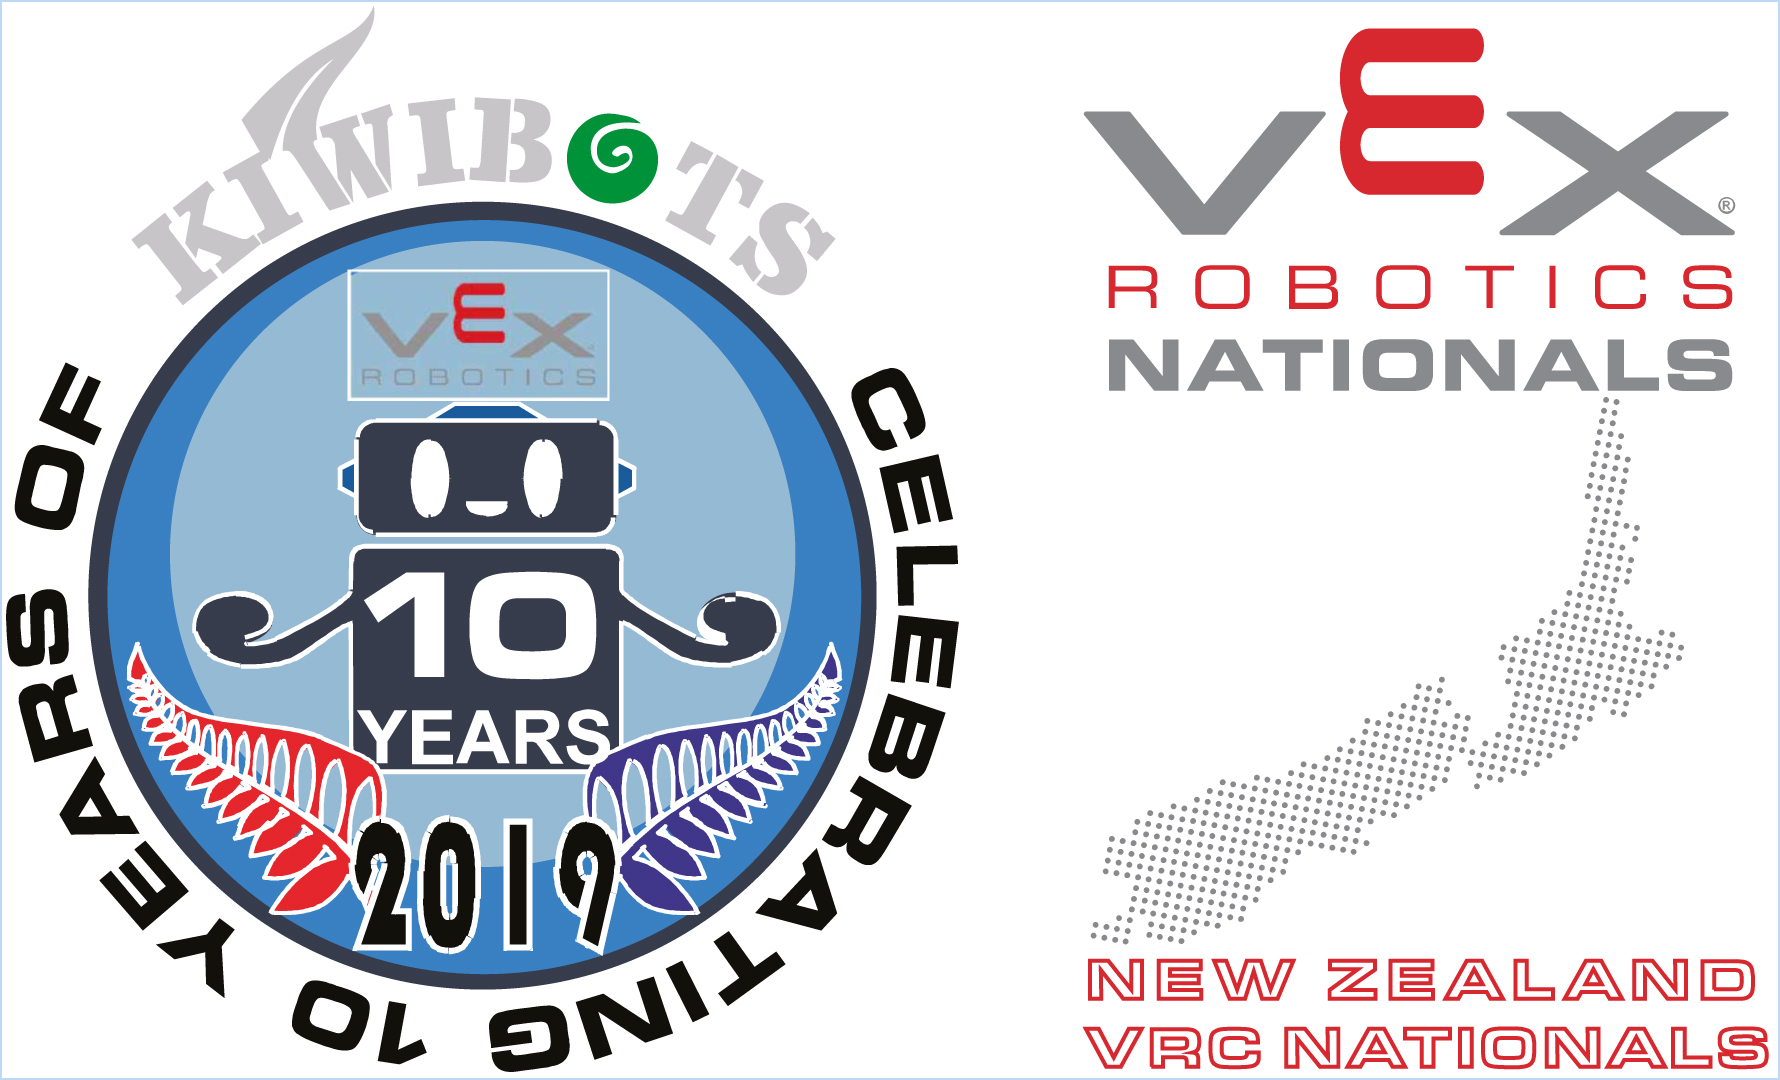 vex robotics logos